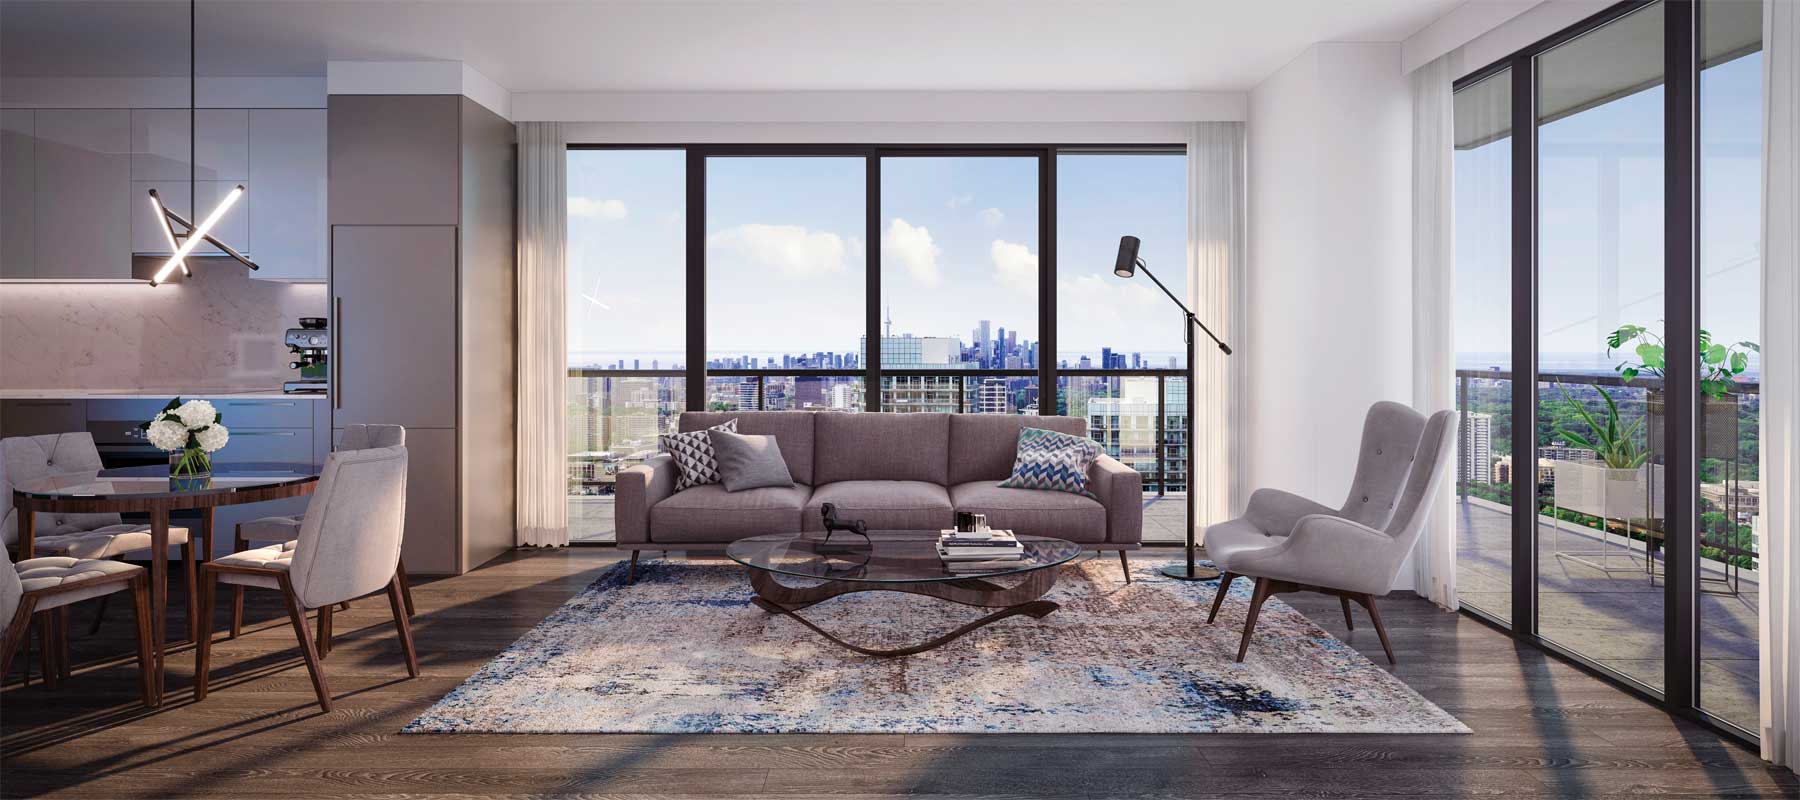 Suite living room rendering of Sixty-Five Broadway Condos.